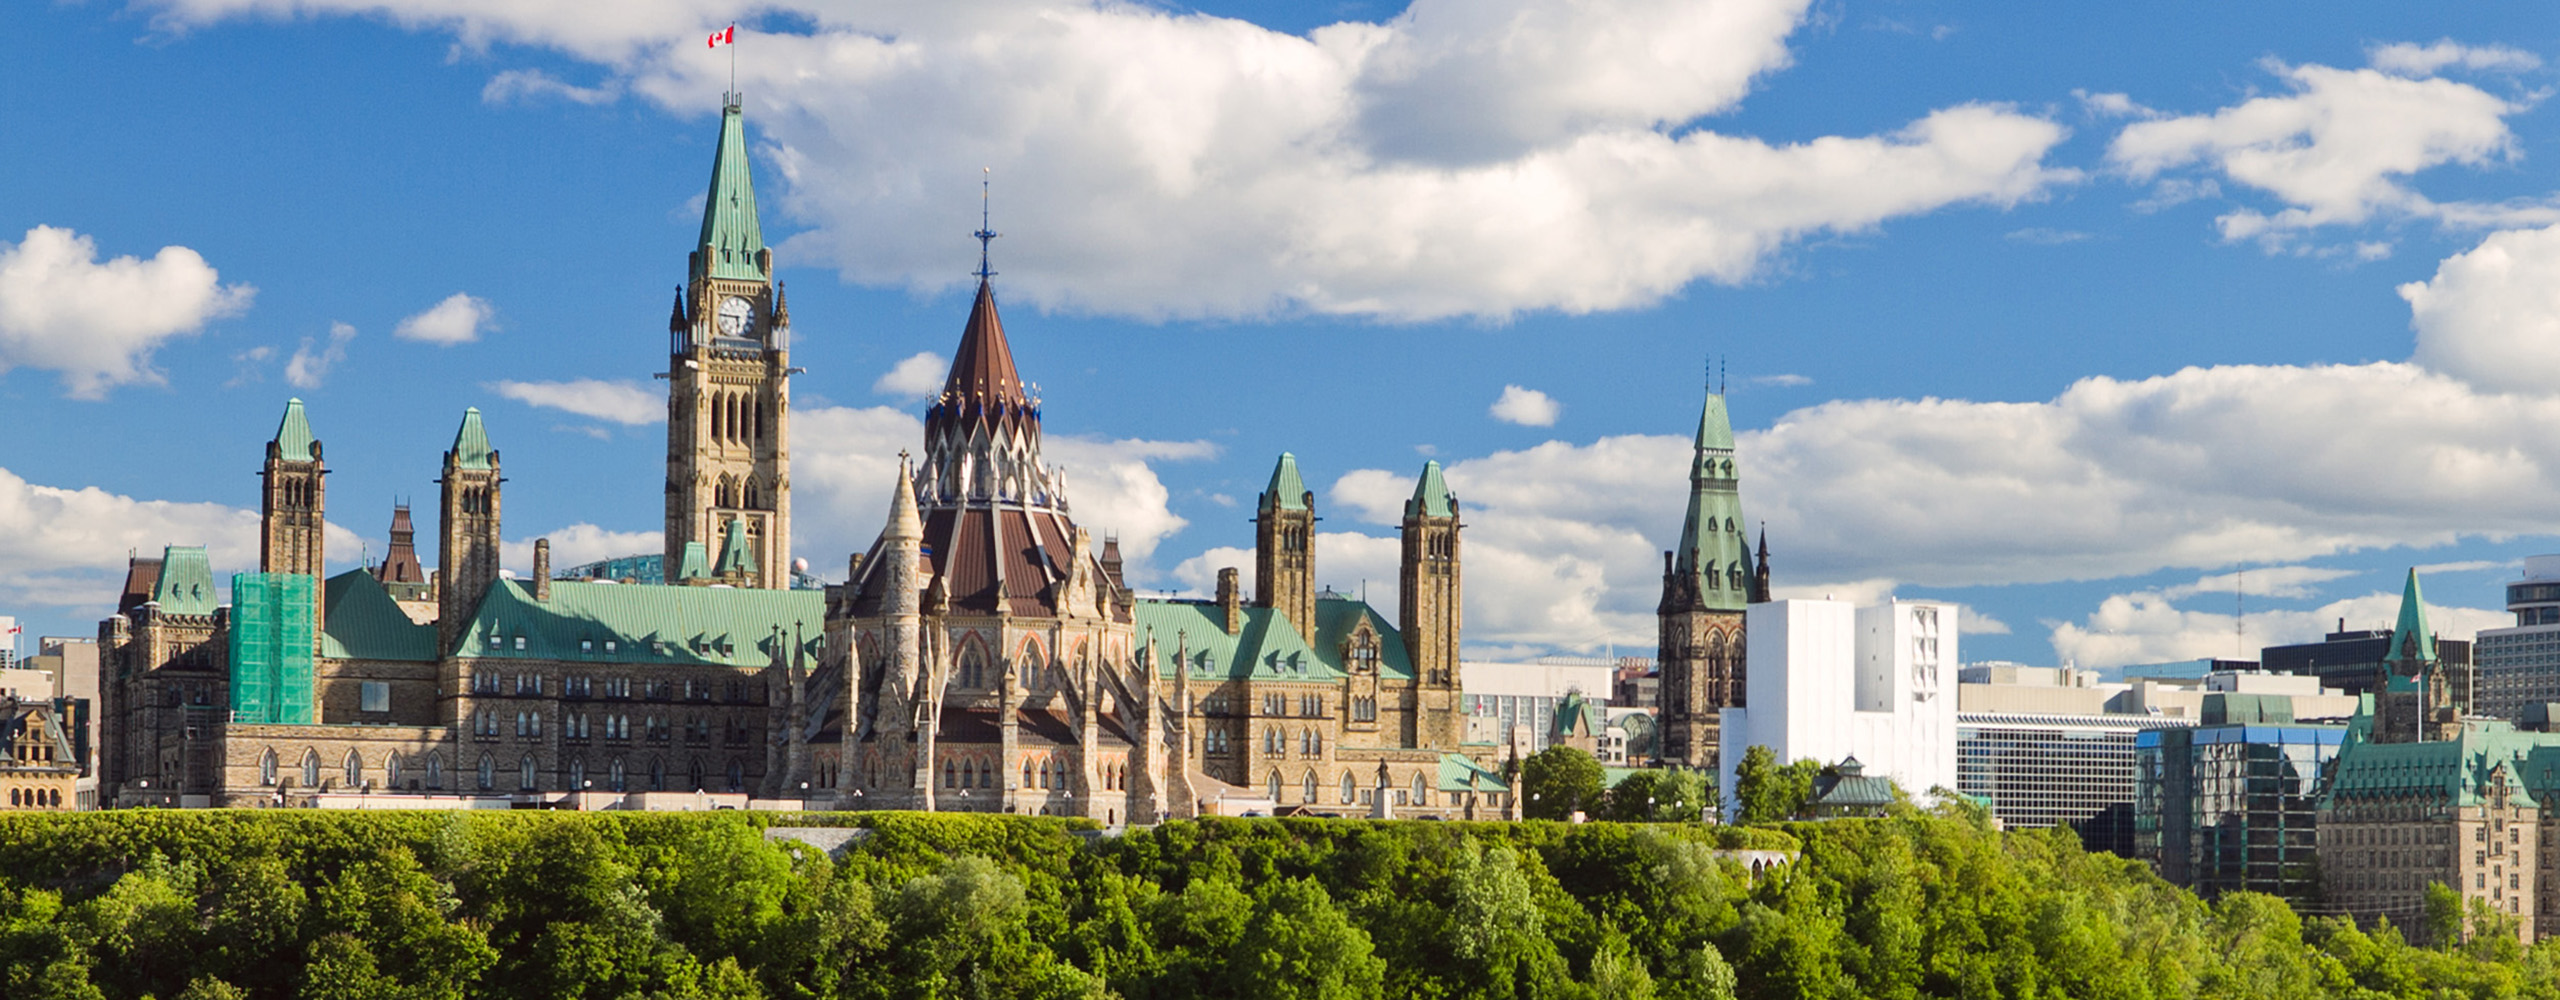 Ottawa Parliament - tradeshows - Stronco